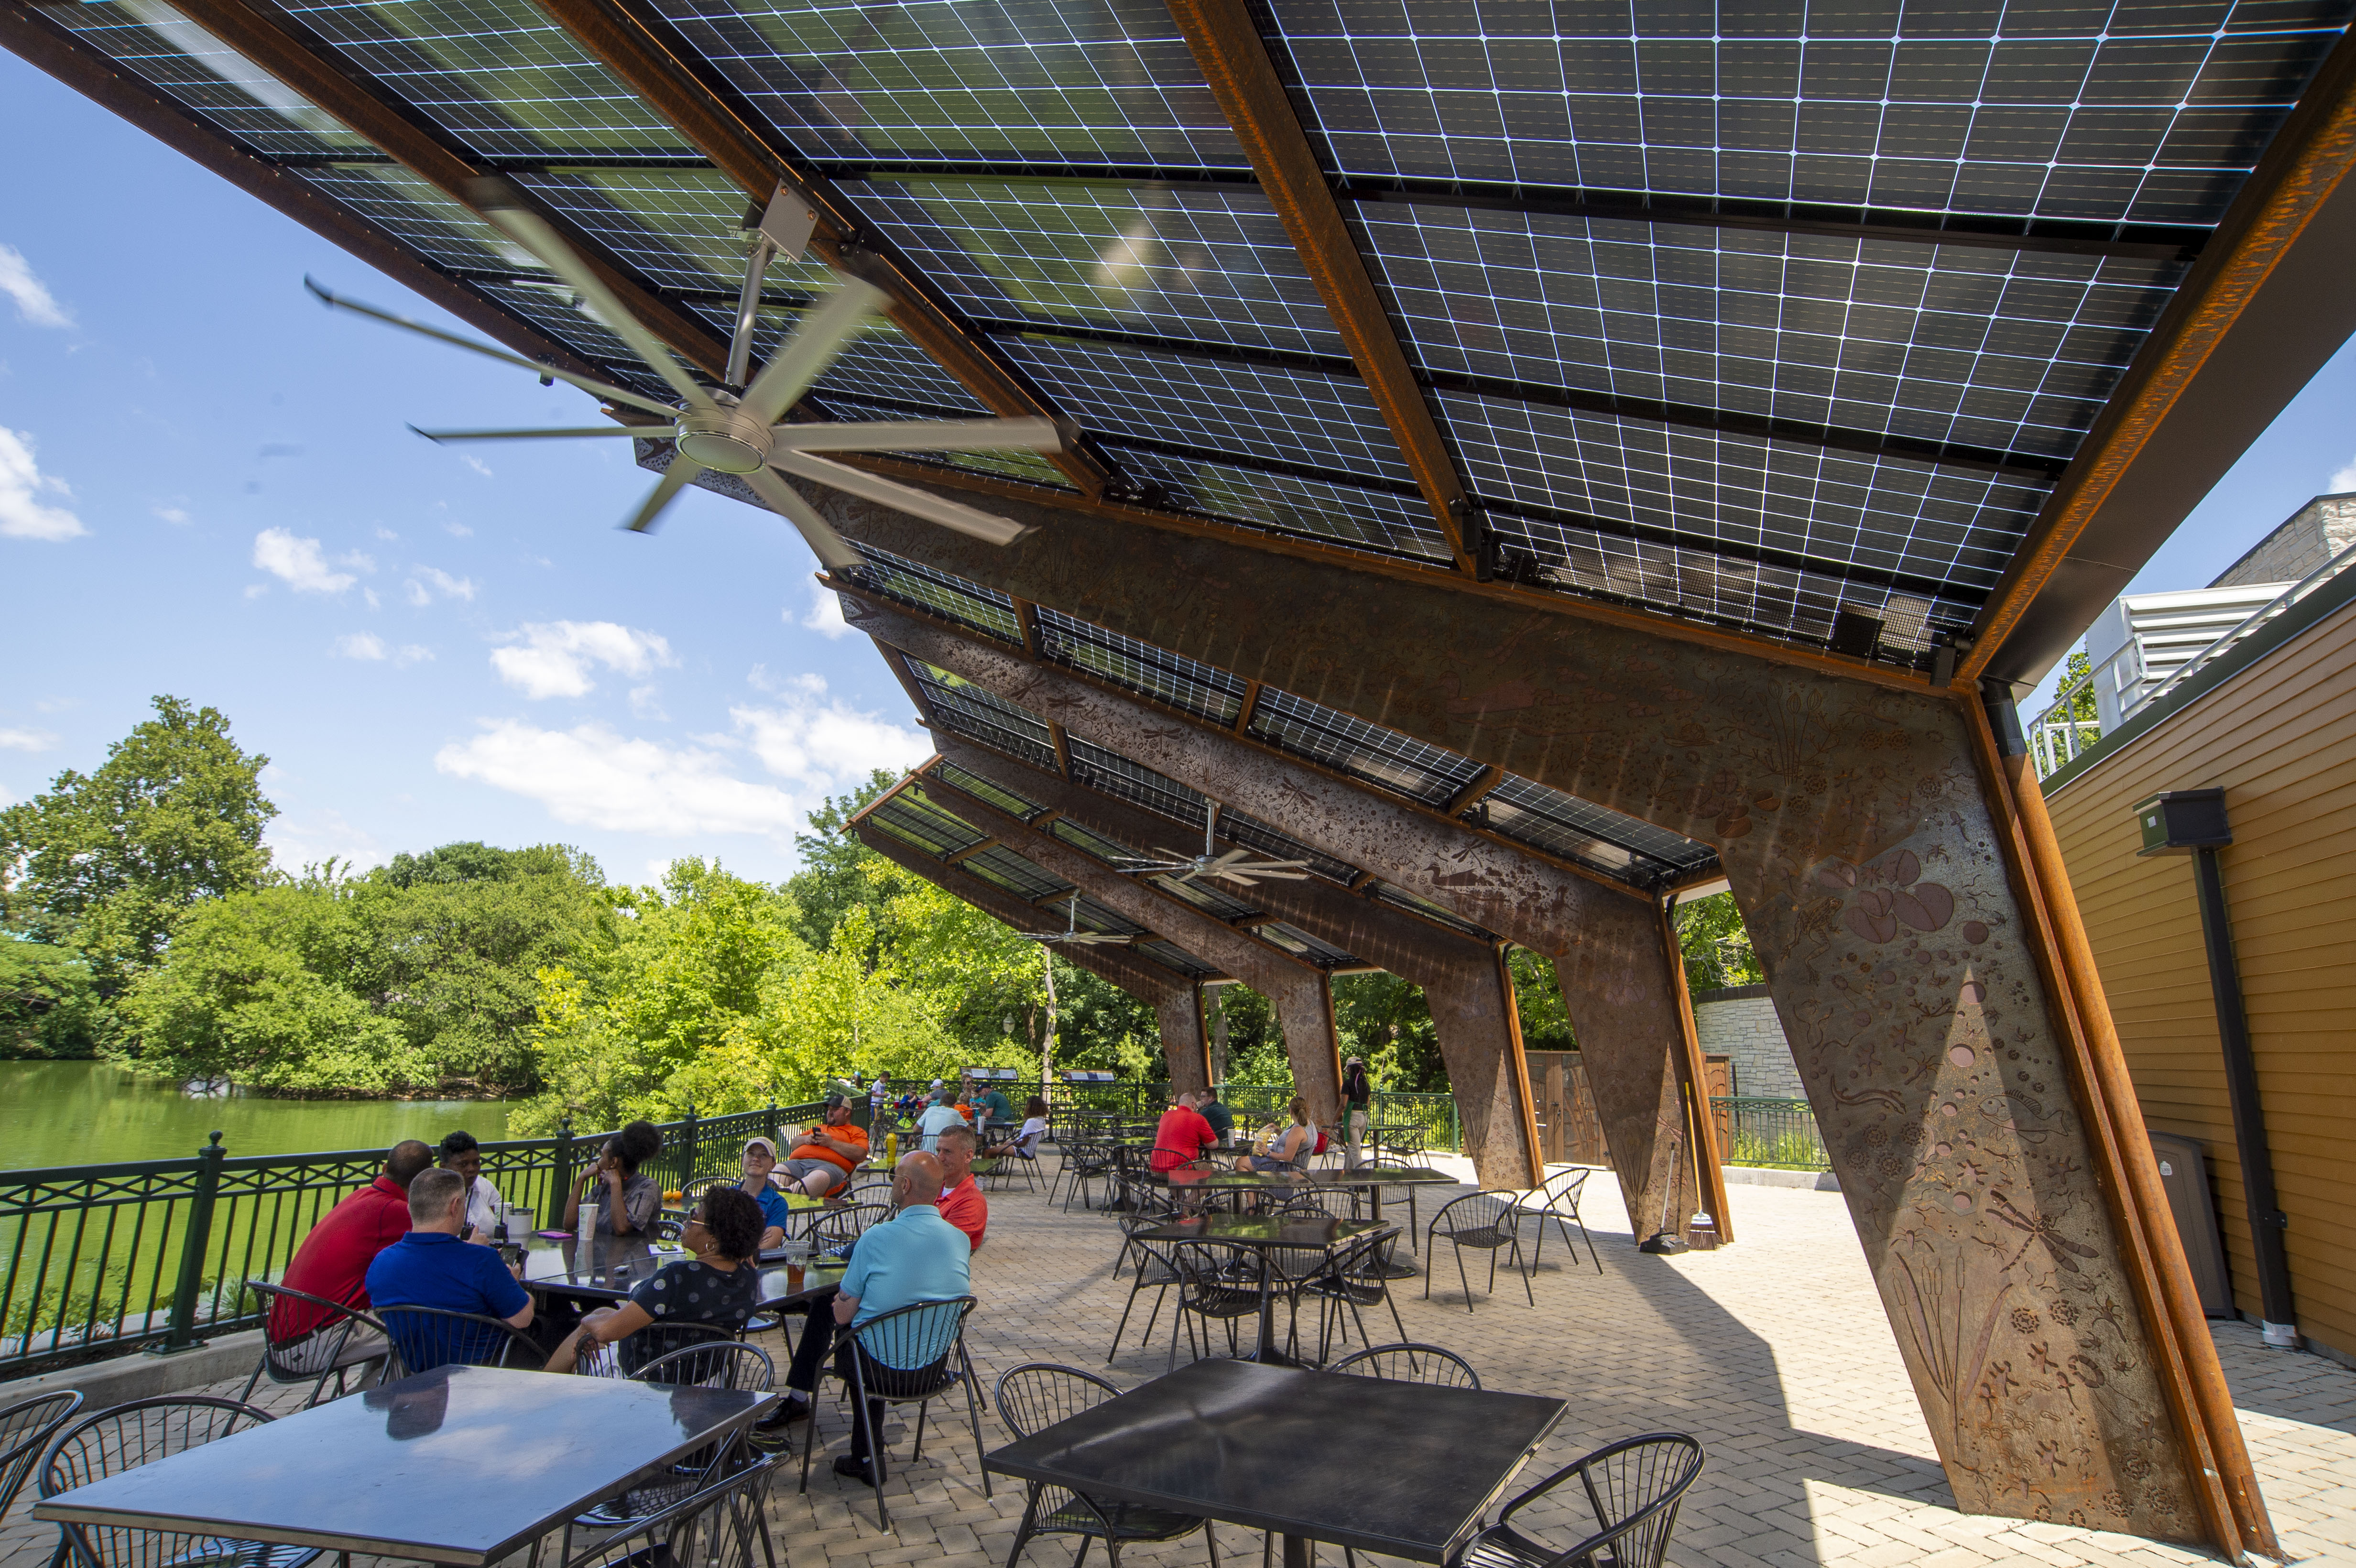 Saint Louis Zoo Solar Canopy Daytime Image